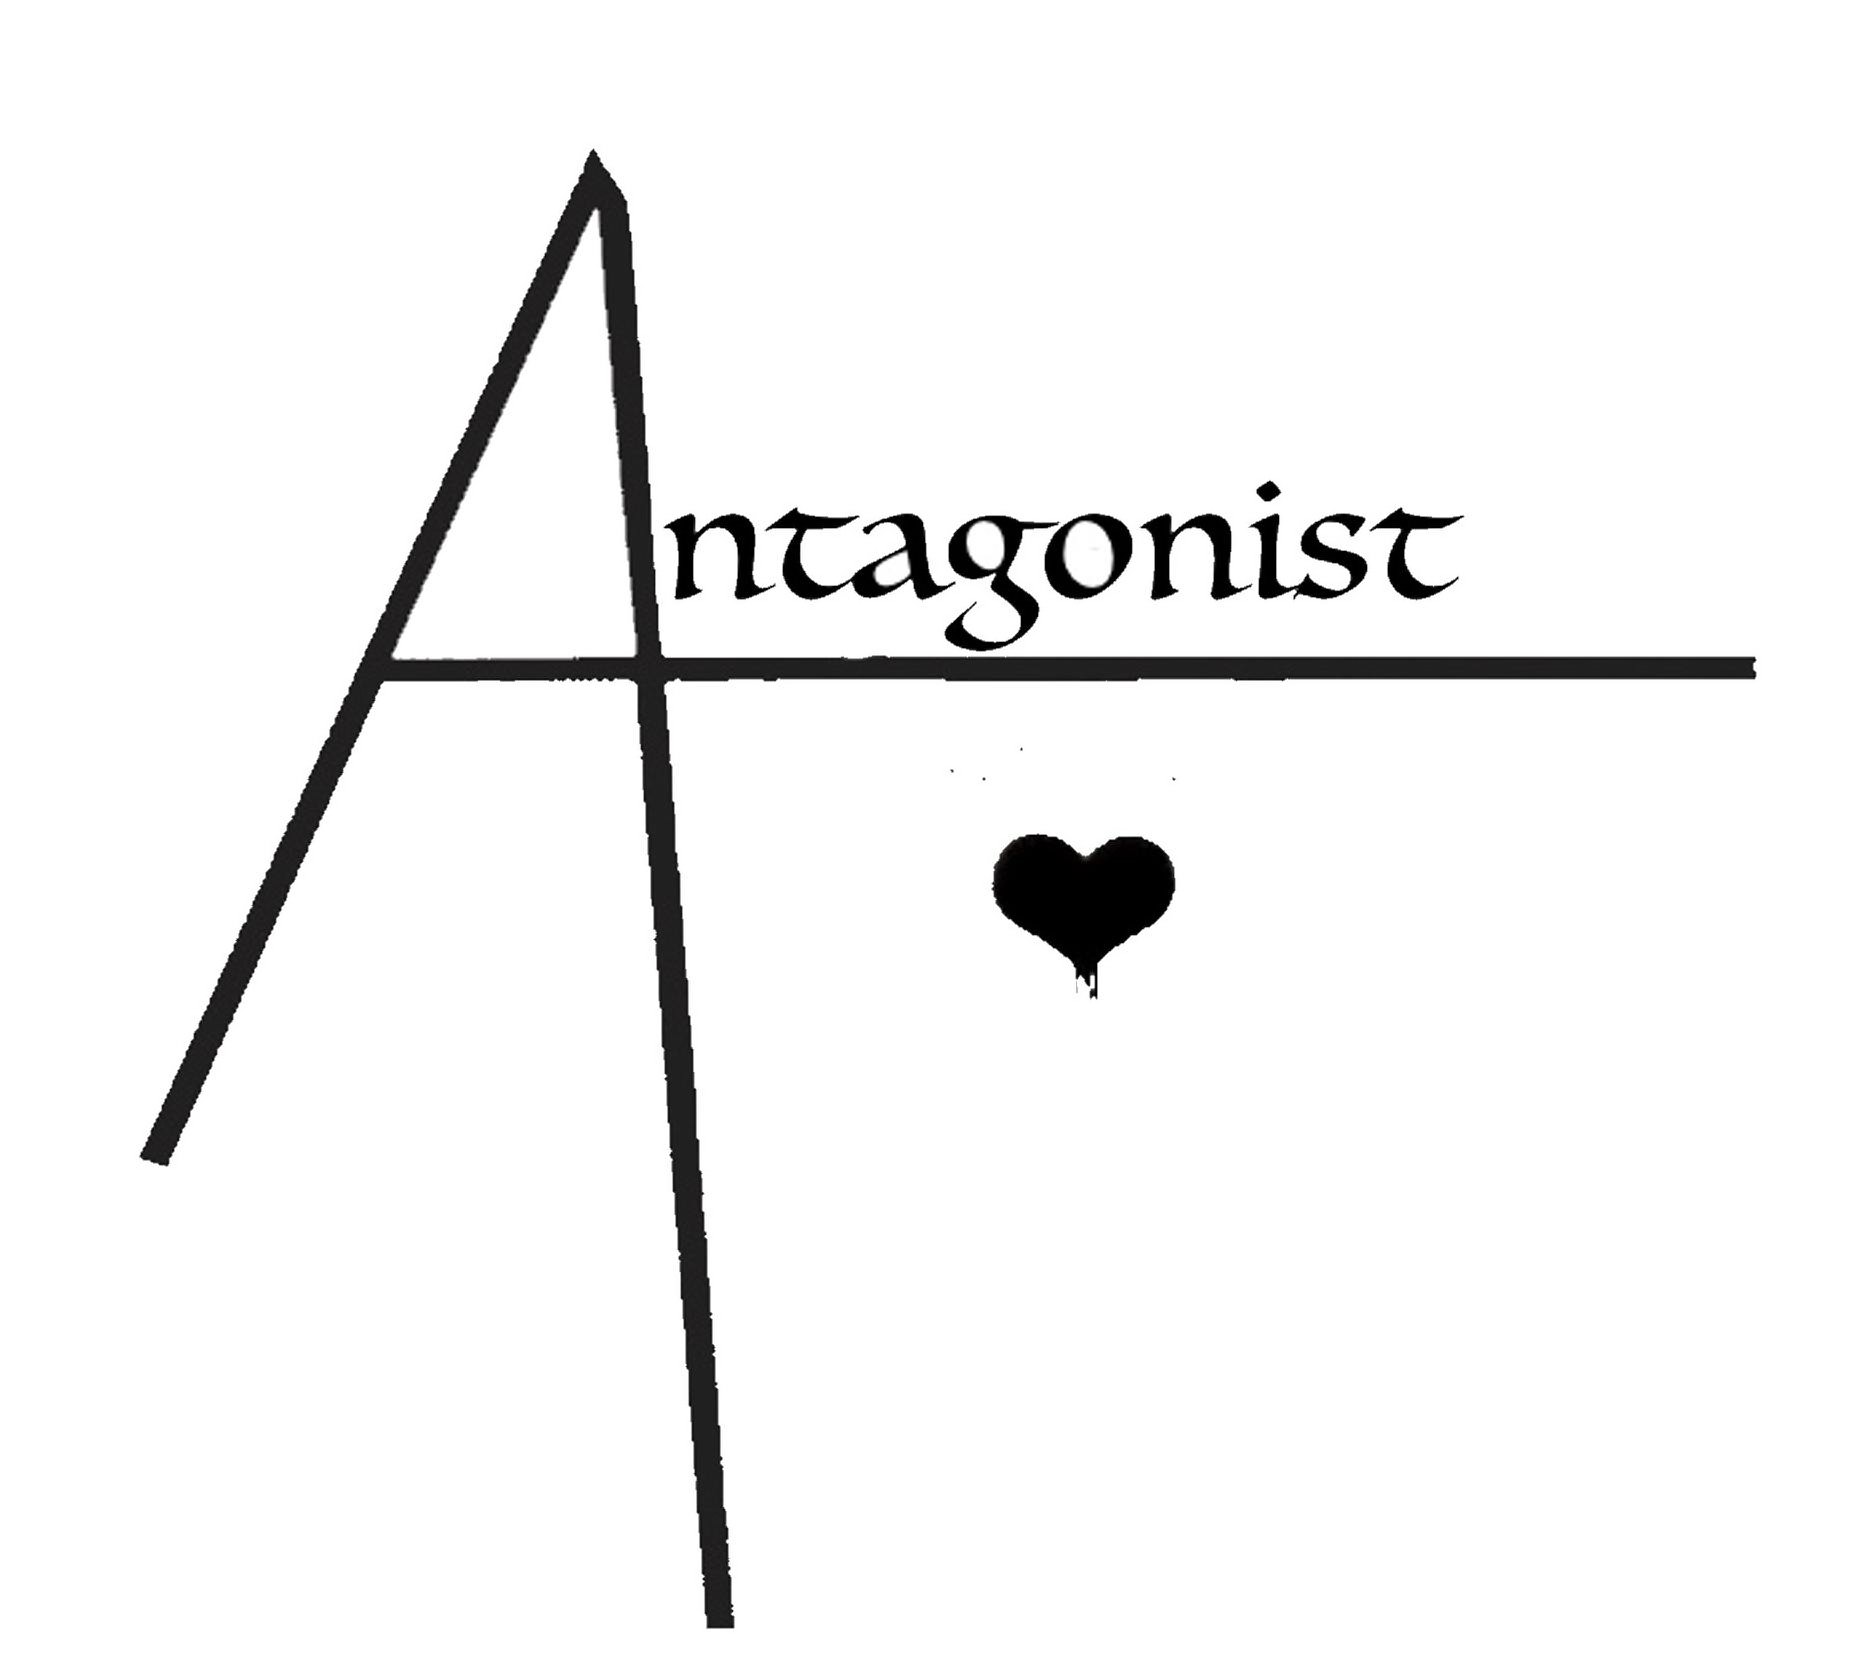 ANTAGONIST